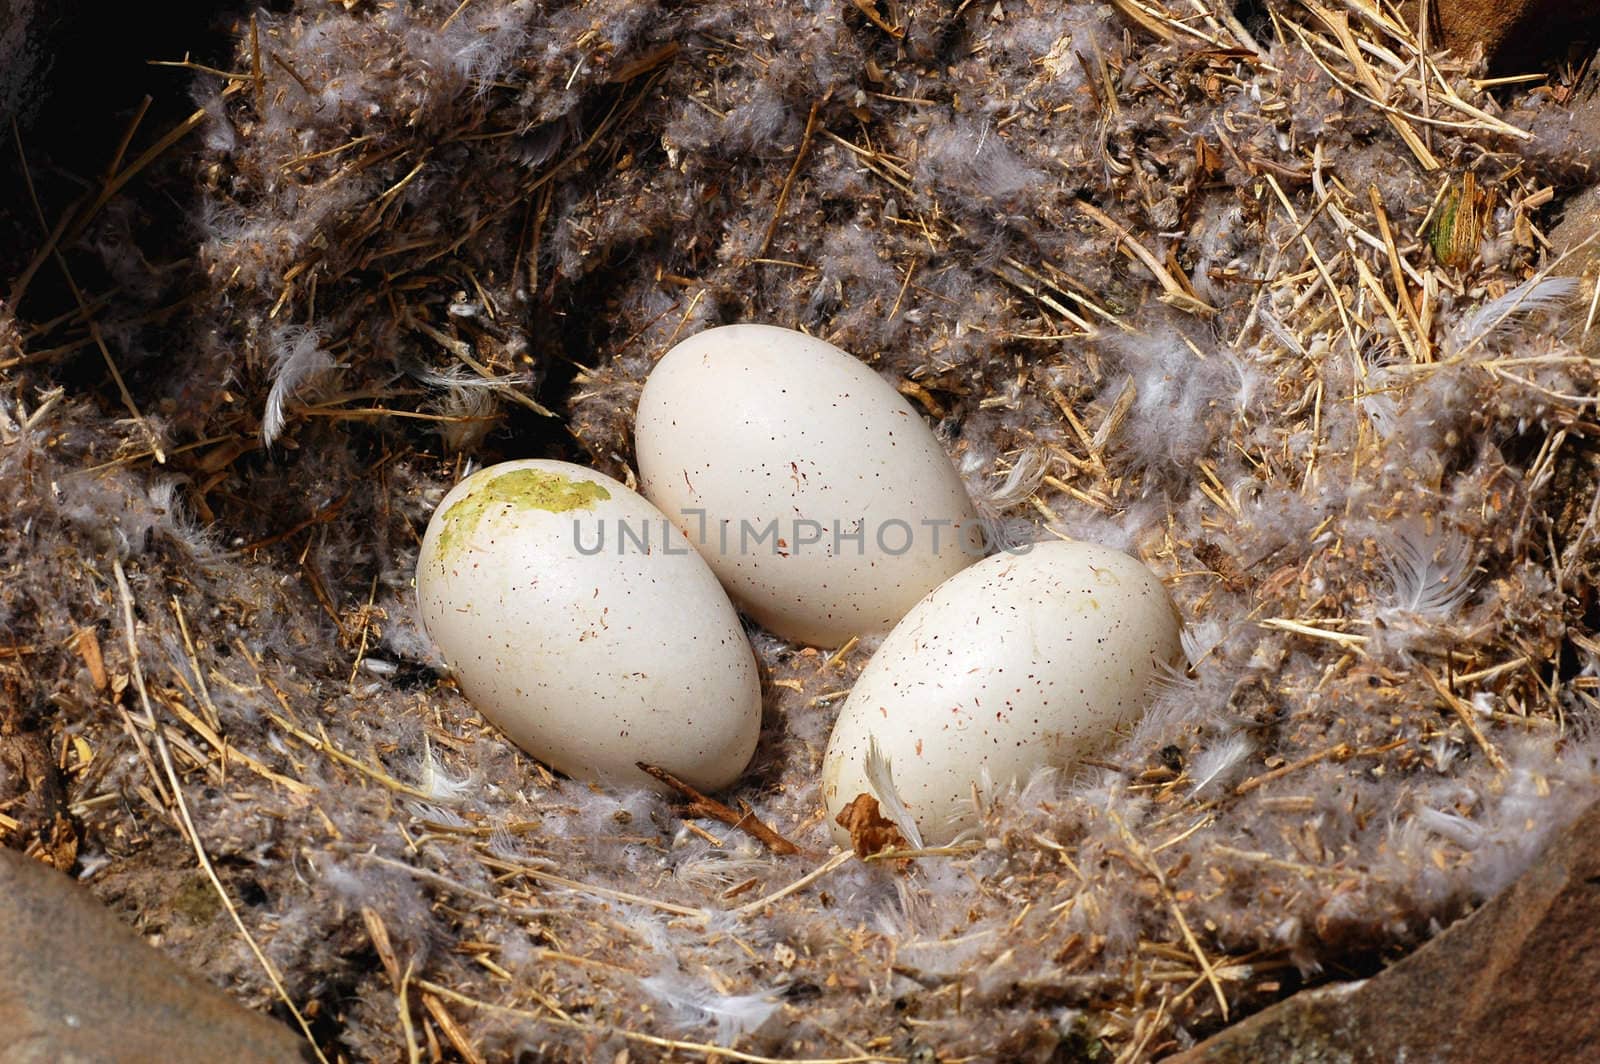 A wild bird nest with three eggs